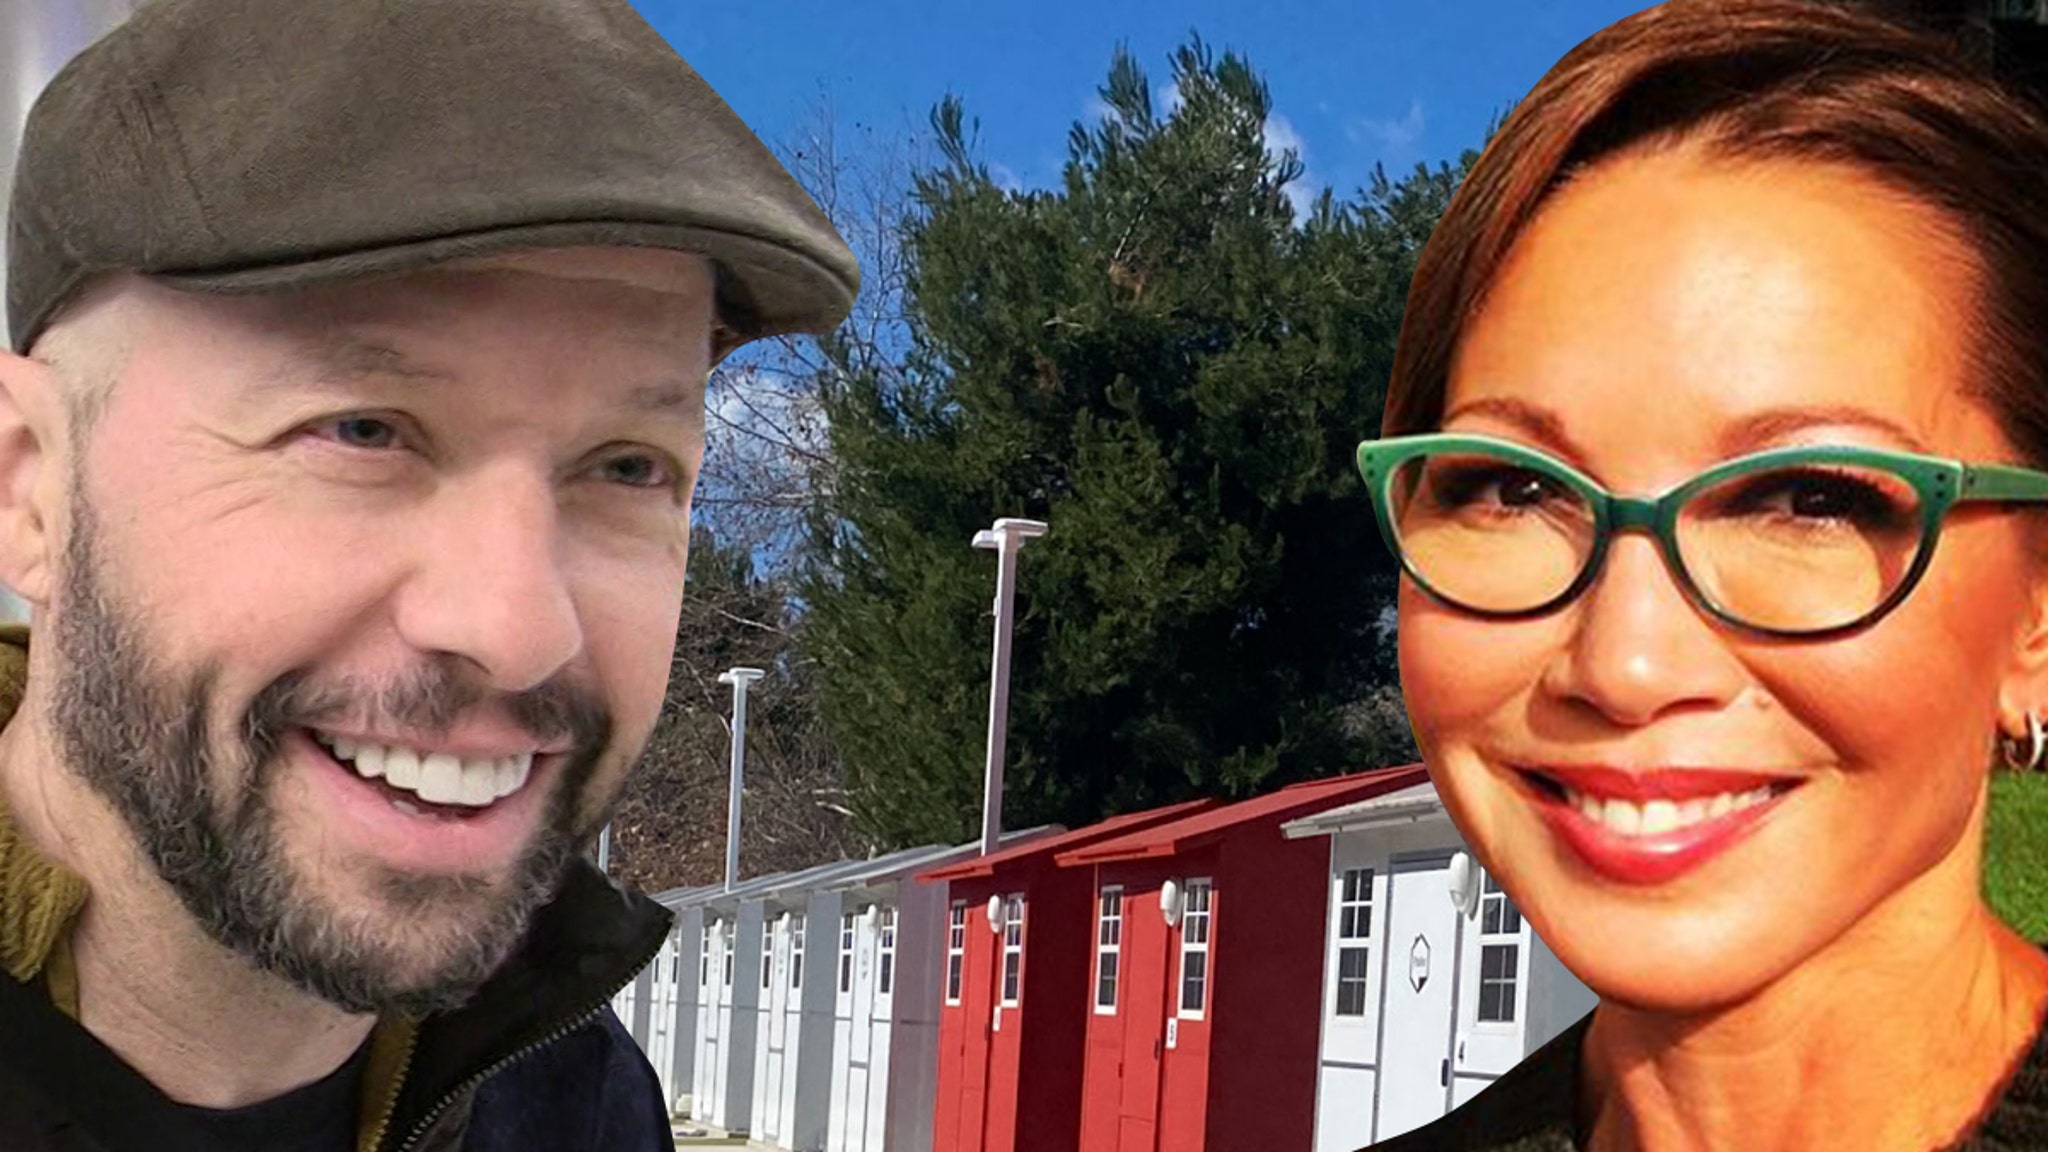 Jon Cryer and wife Lisa Joyner help the organization build small houses for homeless people